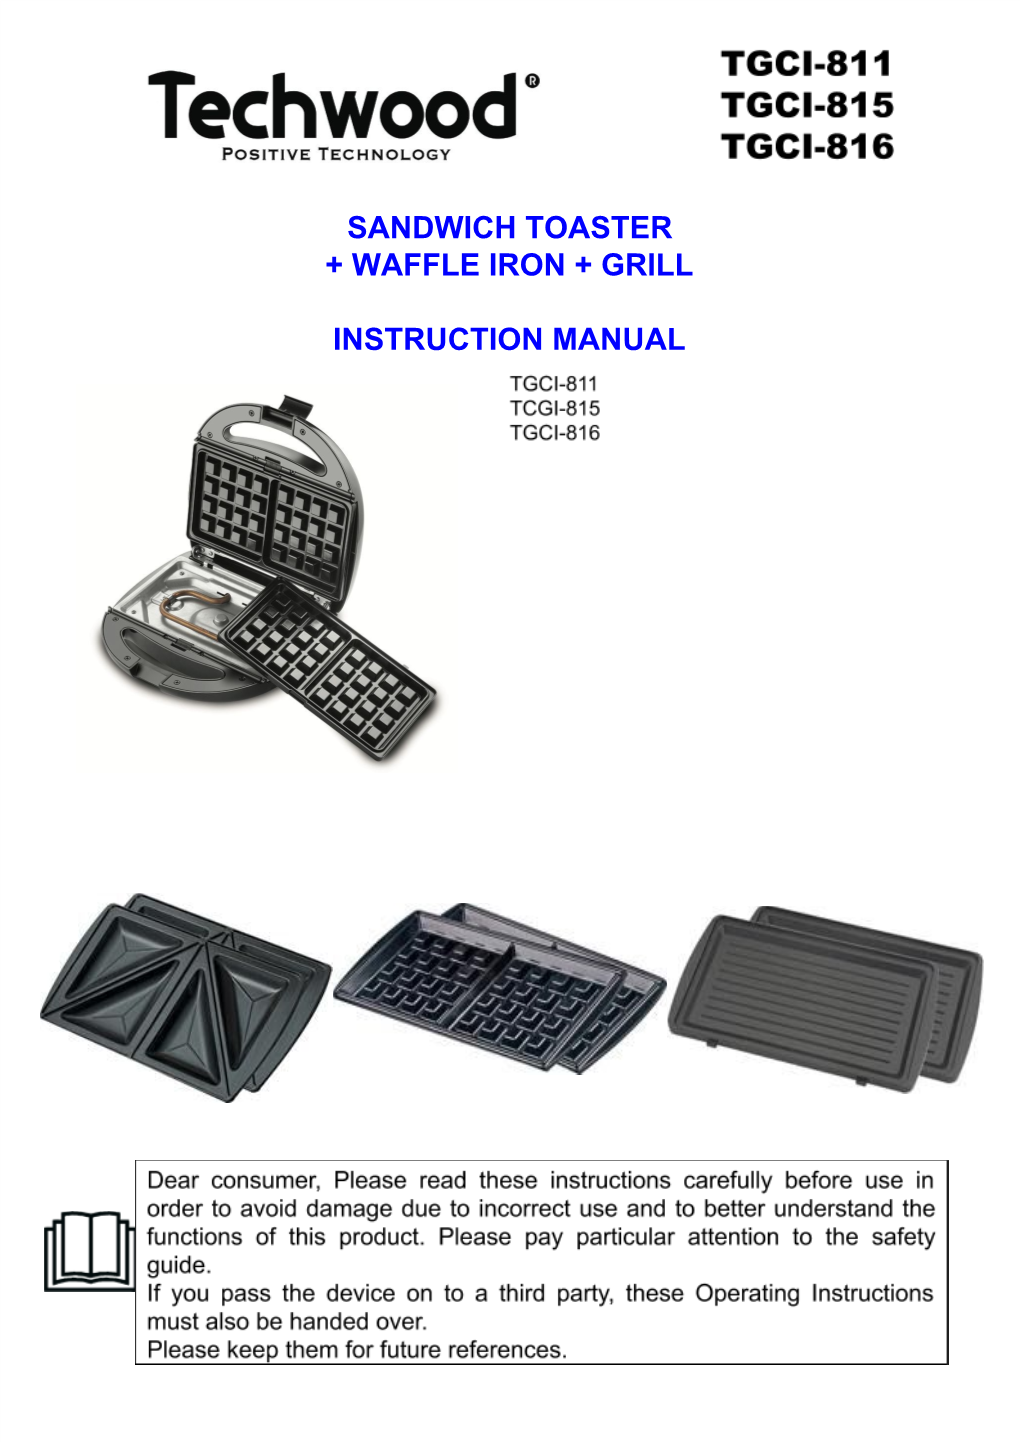 Sandwich Toaster + Waffle Iron + Grill Instruction